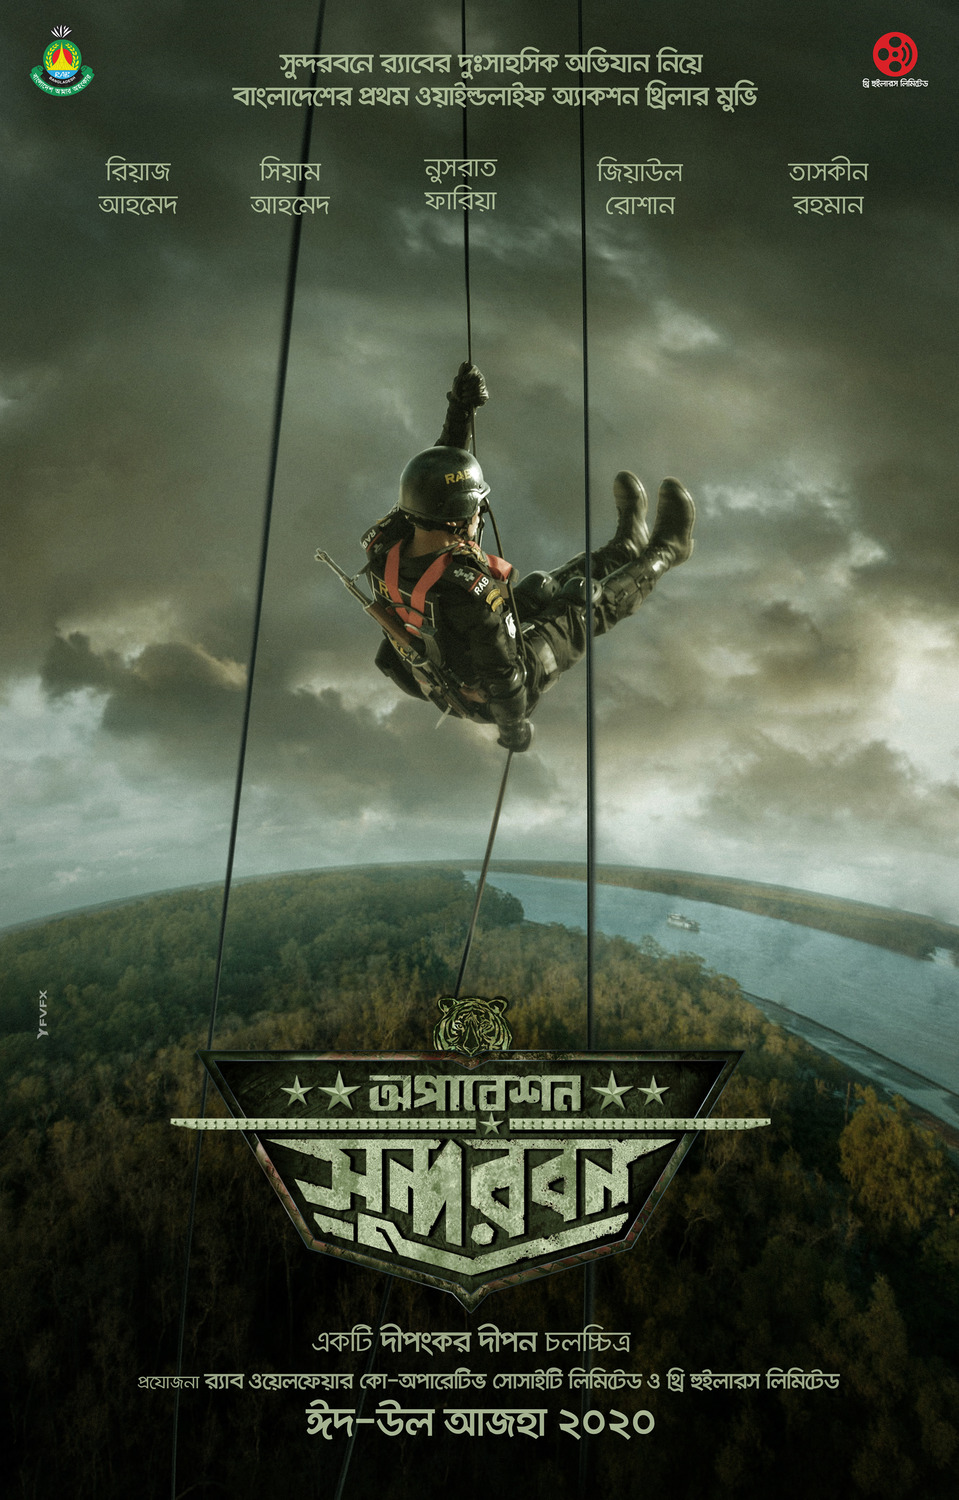 Extra Large Movie Poster Image for Operation Sundarbans 